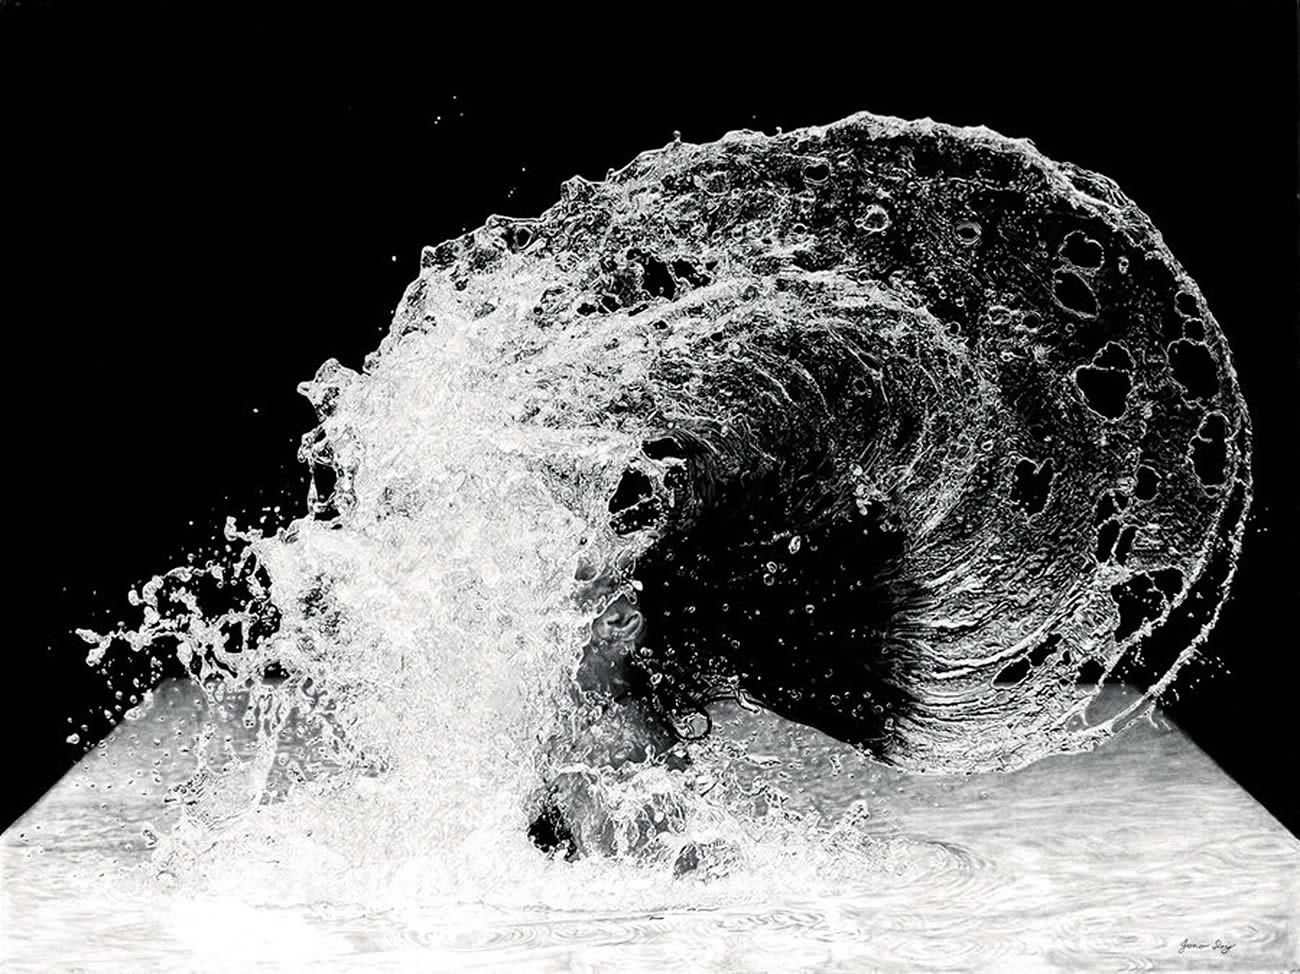 water splash, realistic drawing by jono dry